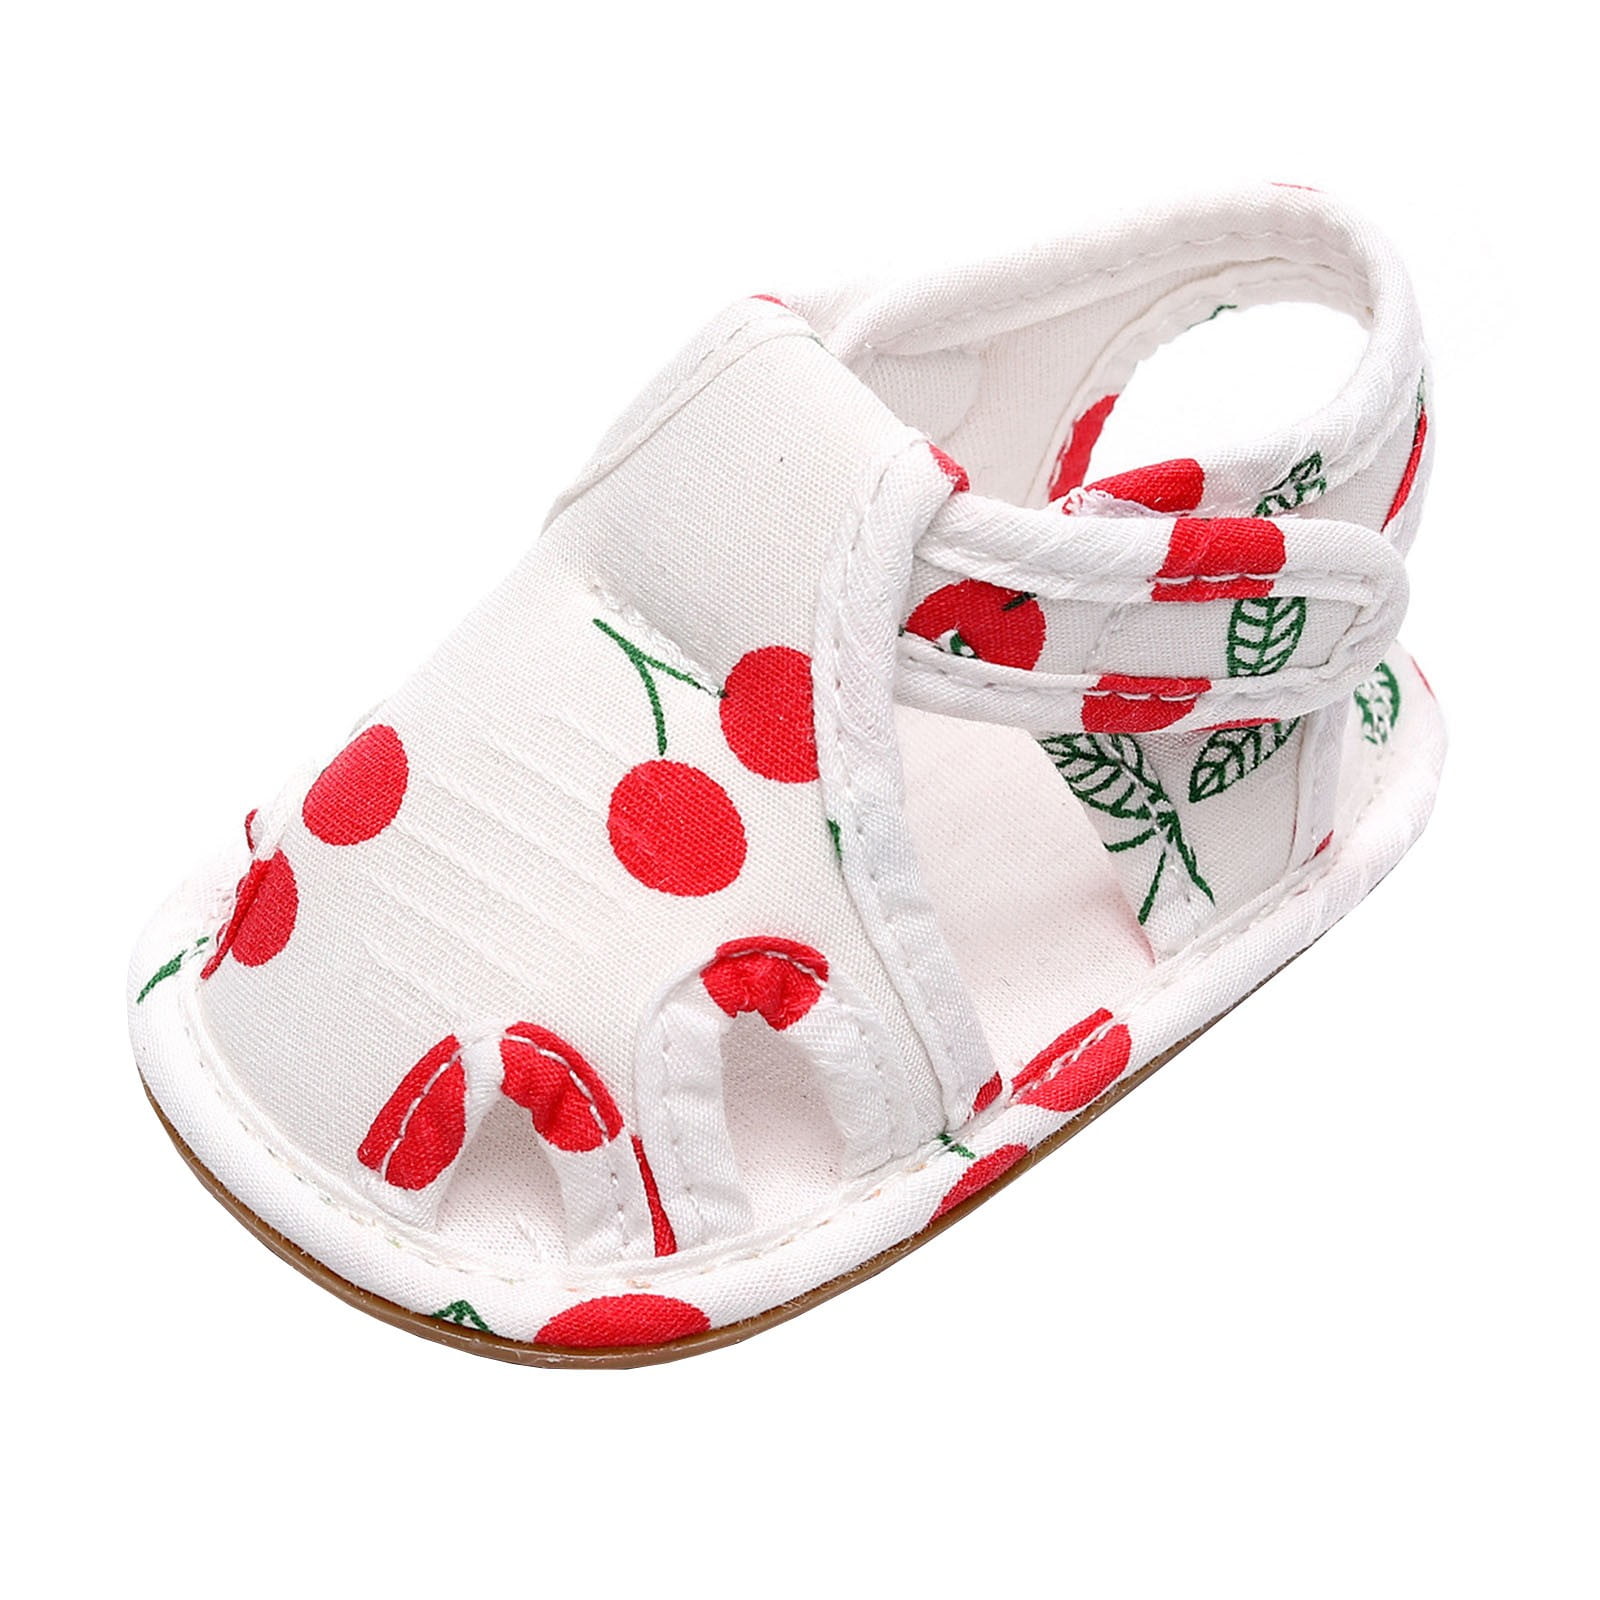 JDEFEG Flip Flops Girls Toddler Shoes Soft Sole Non Slip Toddler Floor  Shoes Fruit Cherry Print Sandals Boys Summer Shoes Size 12 Pu Red 11